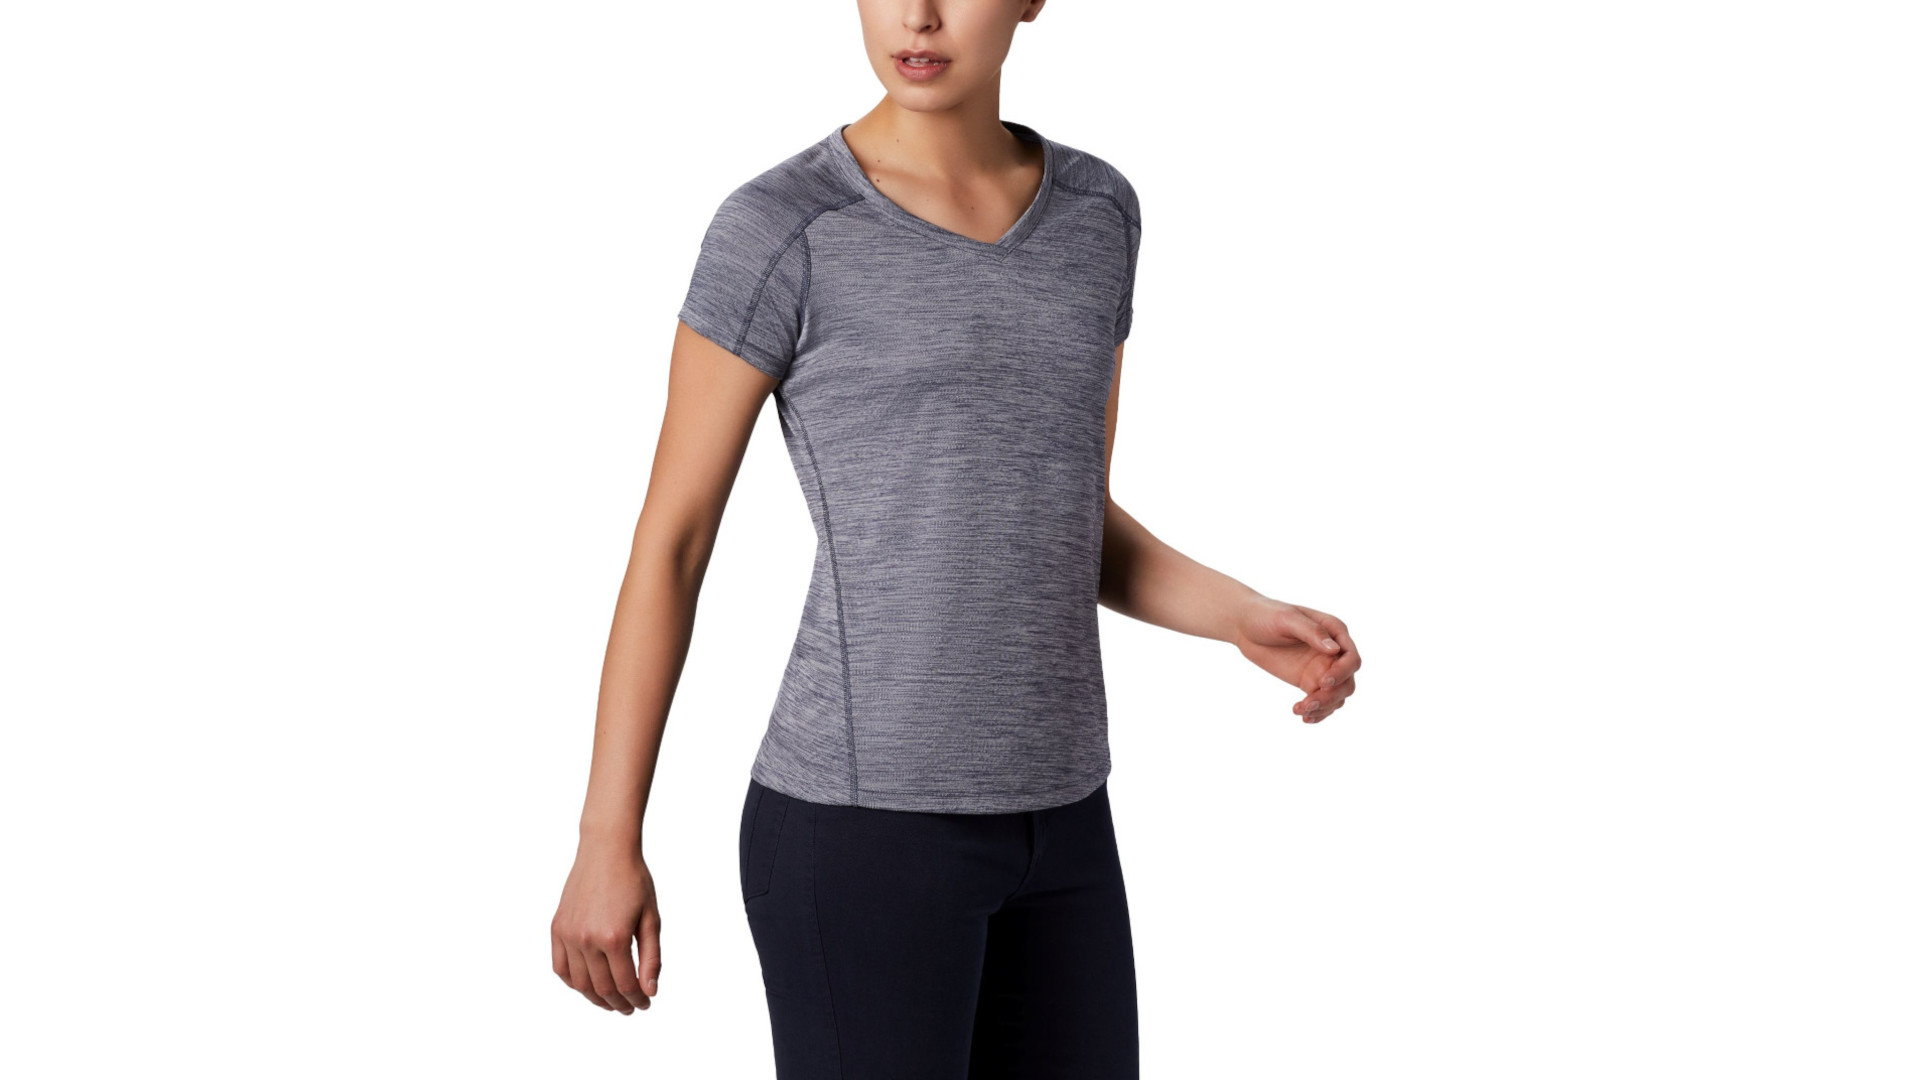 A woman wearing a grey running top